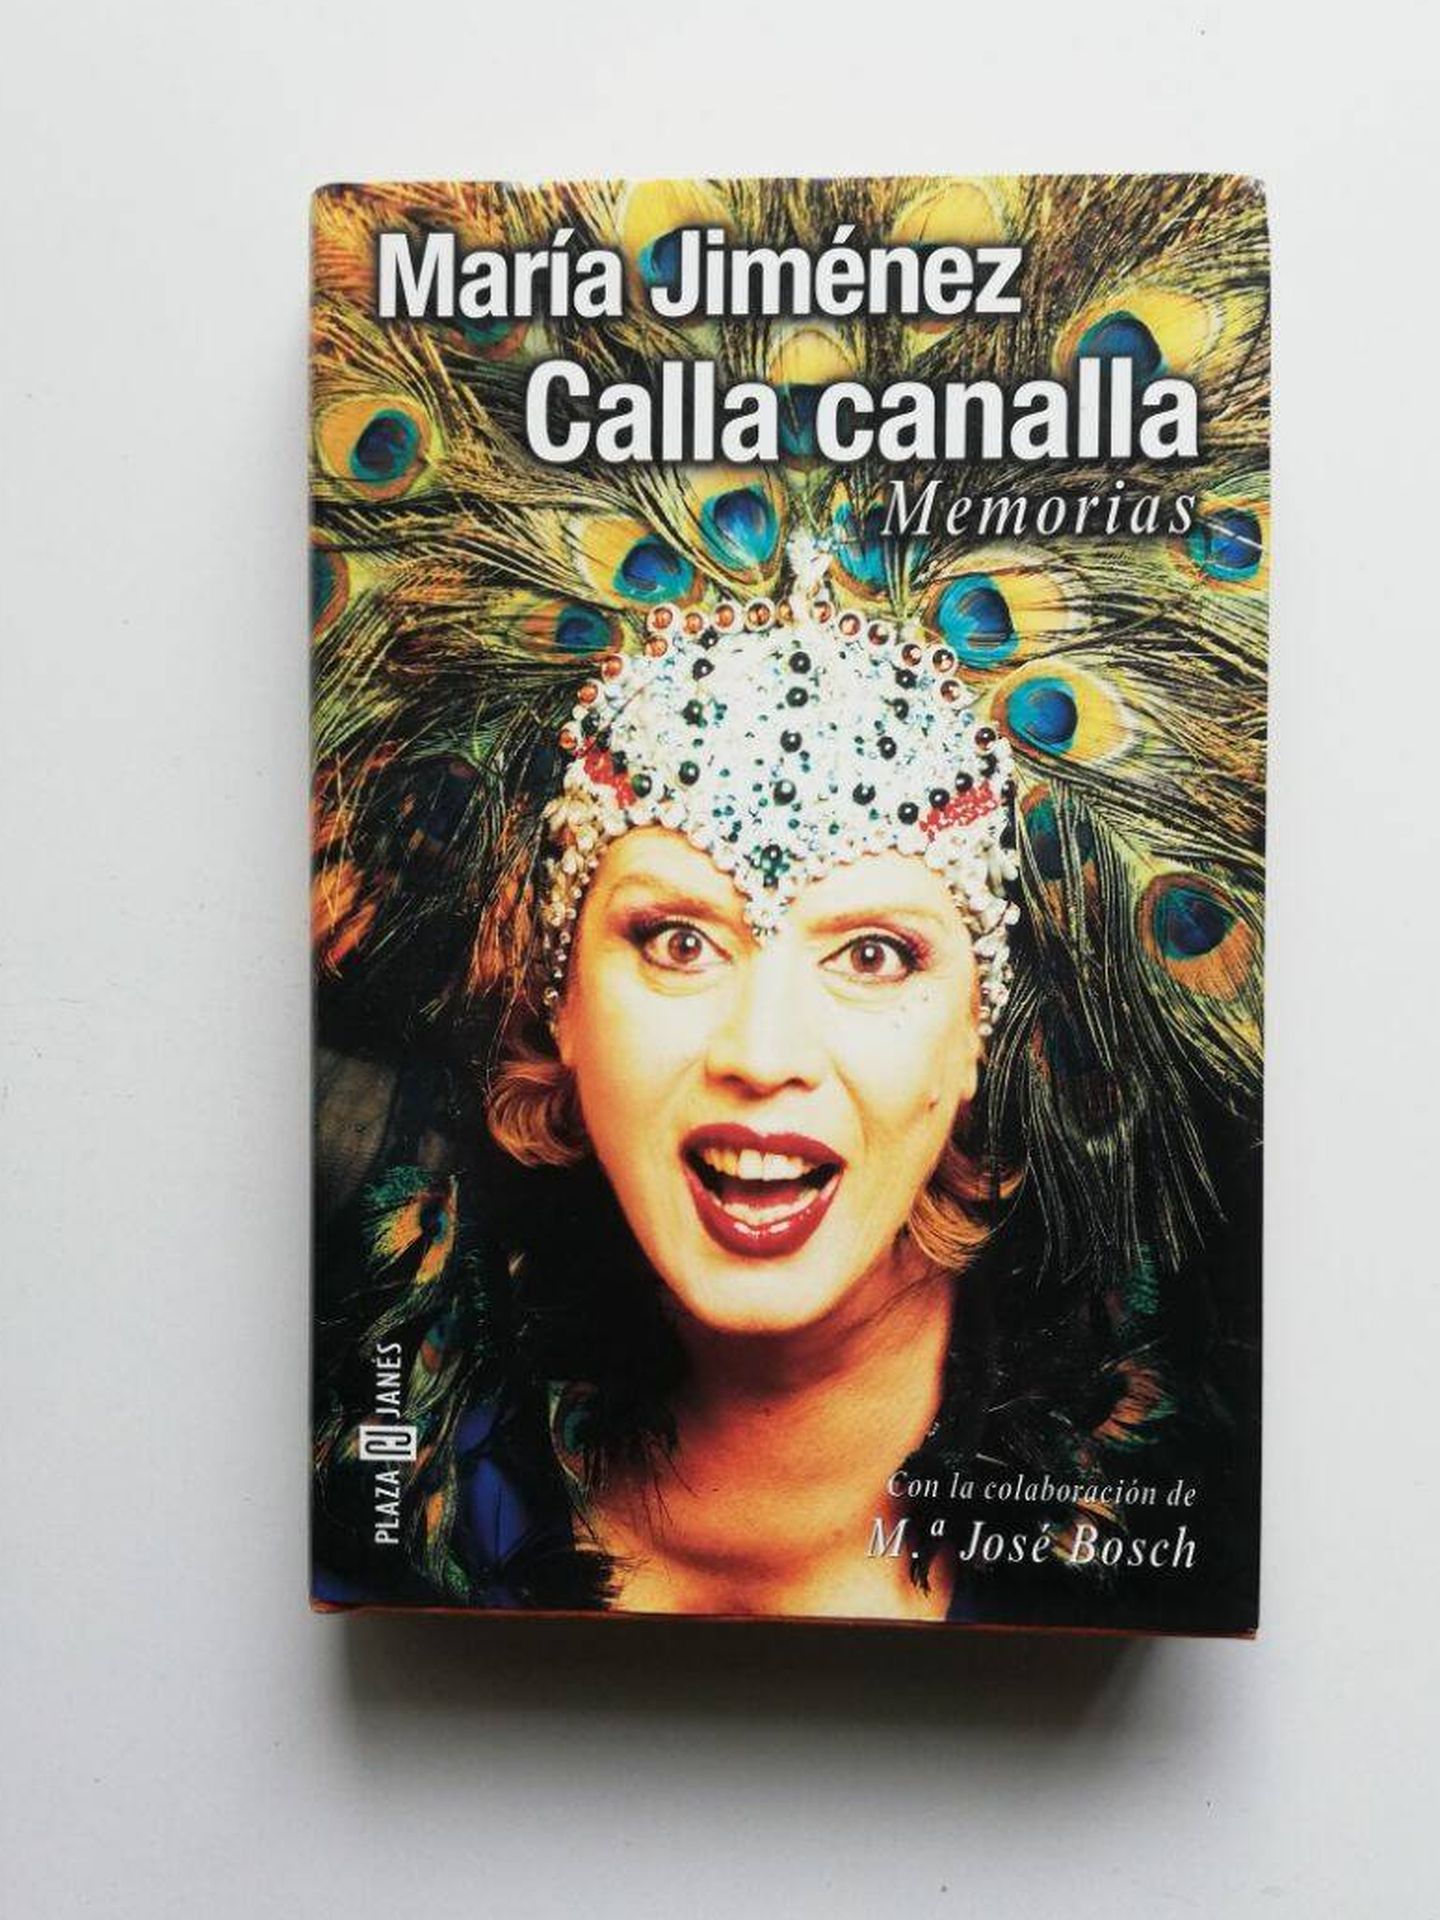 Portada del libro 'Calla canalla' de María Jiménez. 